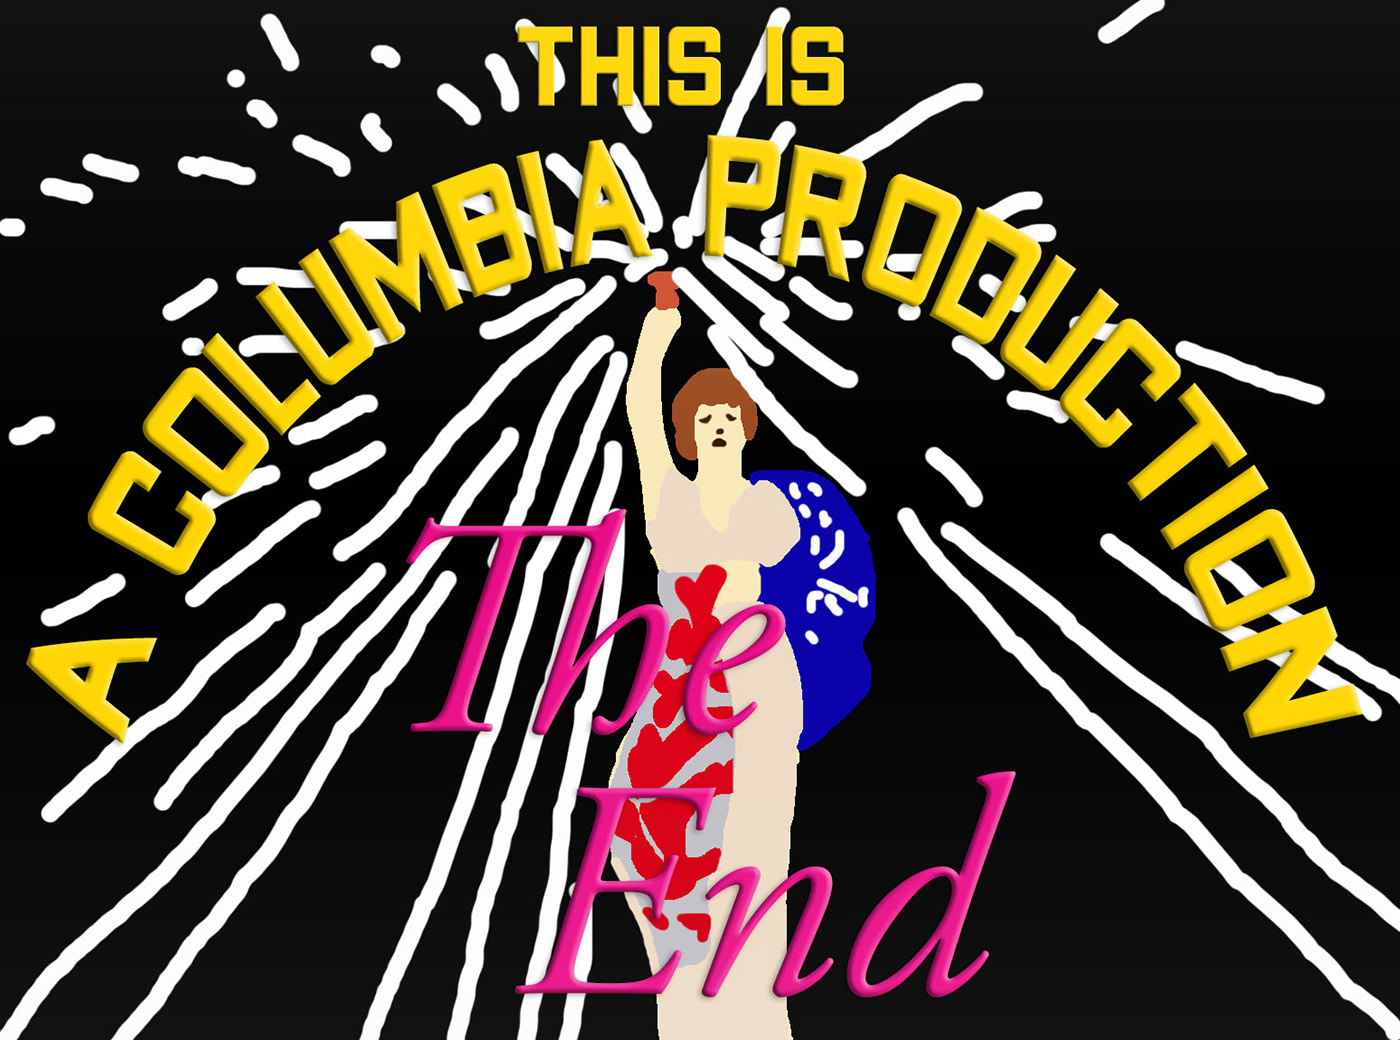 Columbia Productions closings